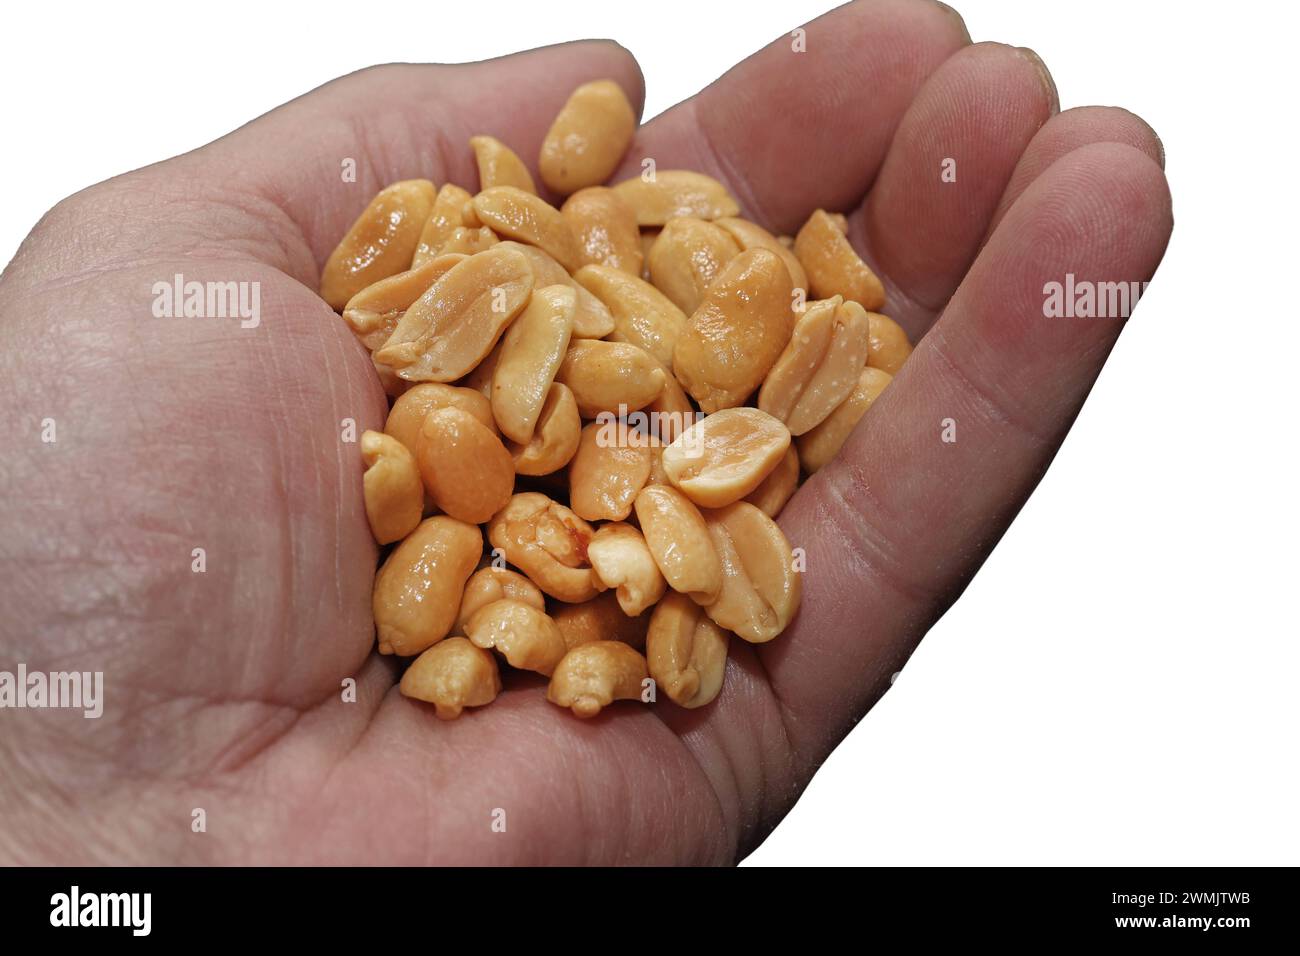 Erdnüsse als Snack BEARBEITET: Gesalzene und geröstete Erdnüsse mit hohem Fettgehalt als Snack *** Peanuts as a snack PROCESSED Salted and roasted peanuts with a high fat content as a snack Stock Photo